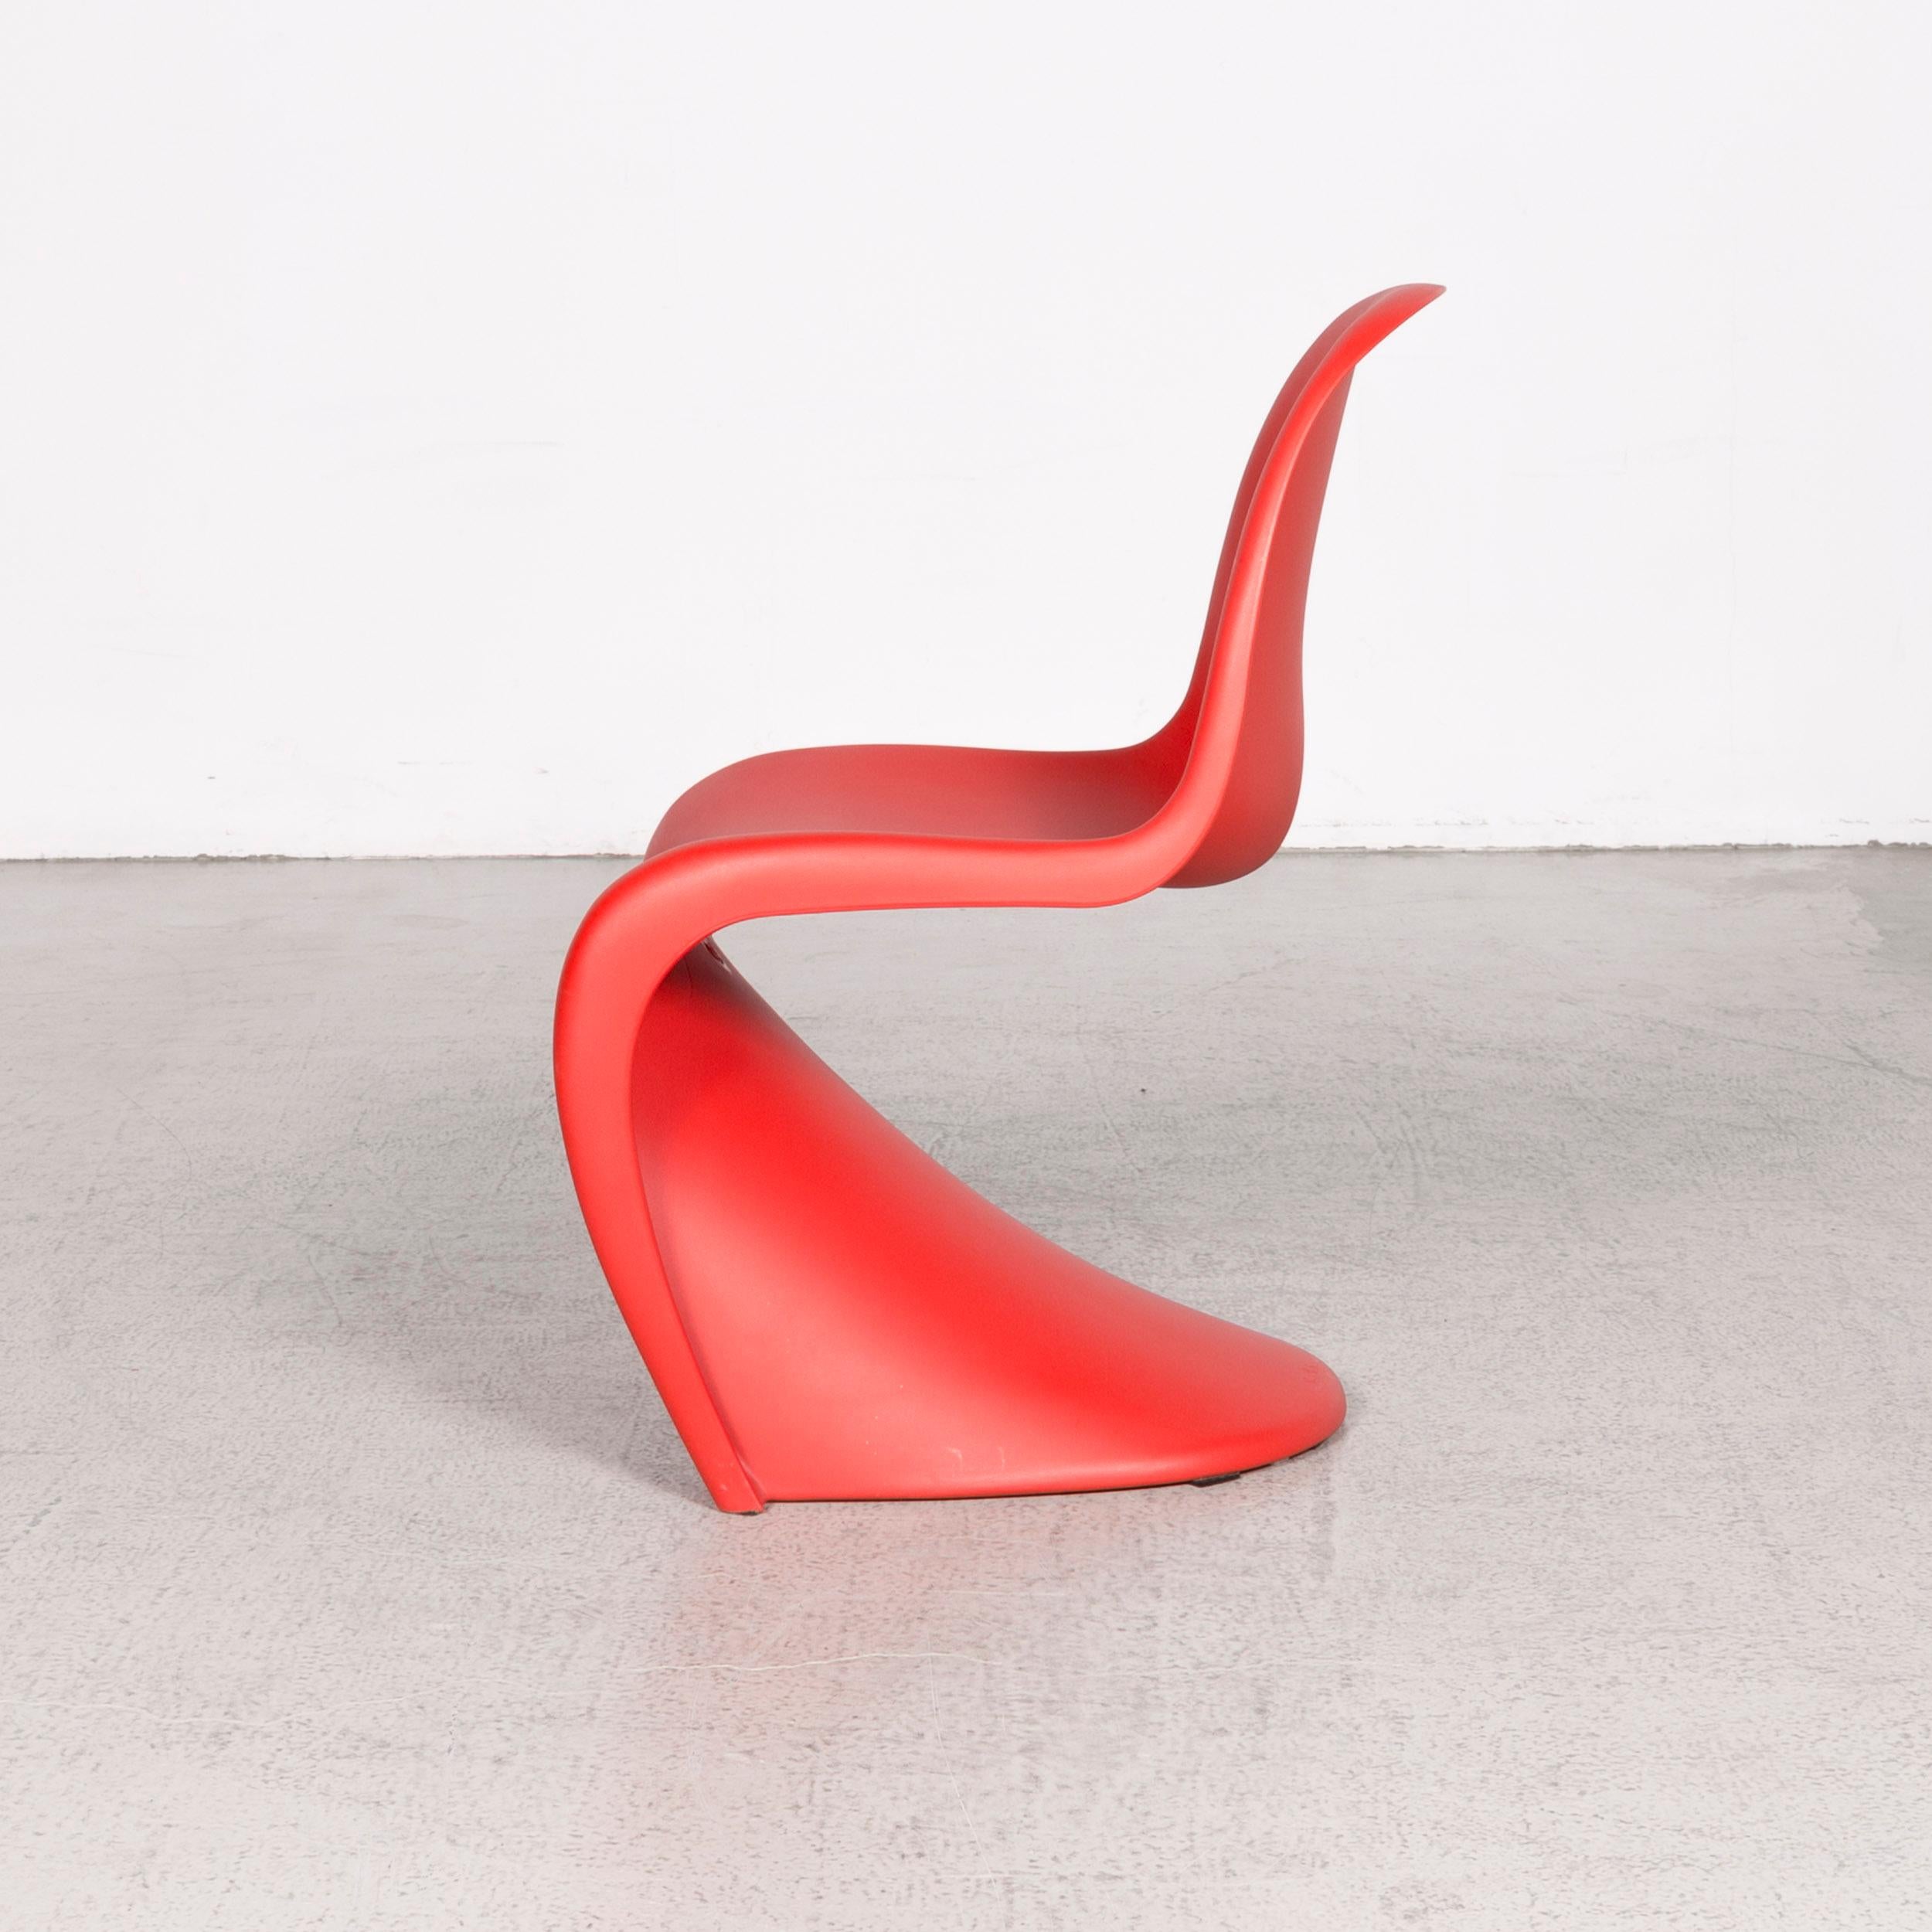 Vitra Panton Chair Designer Plastic Armchair Red by Verner Panton Polyproypylen For Sale 3